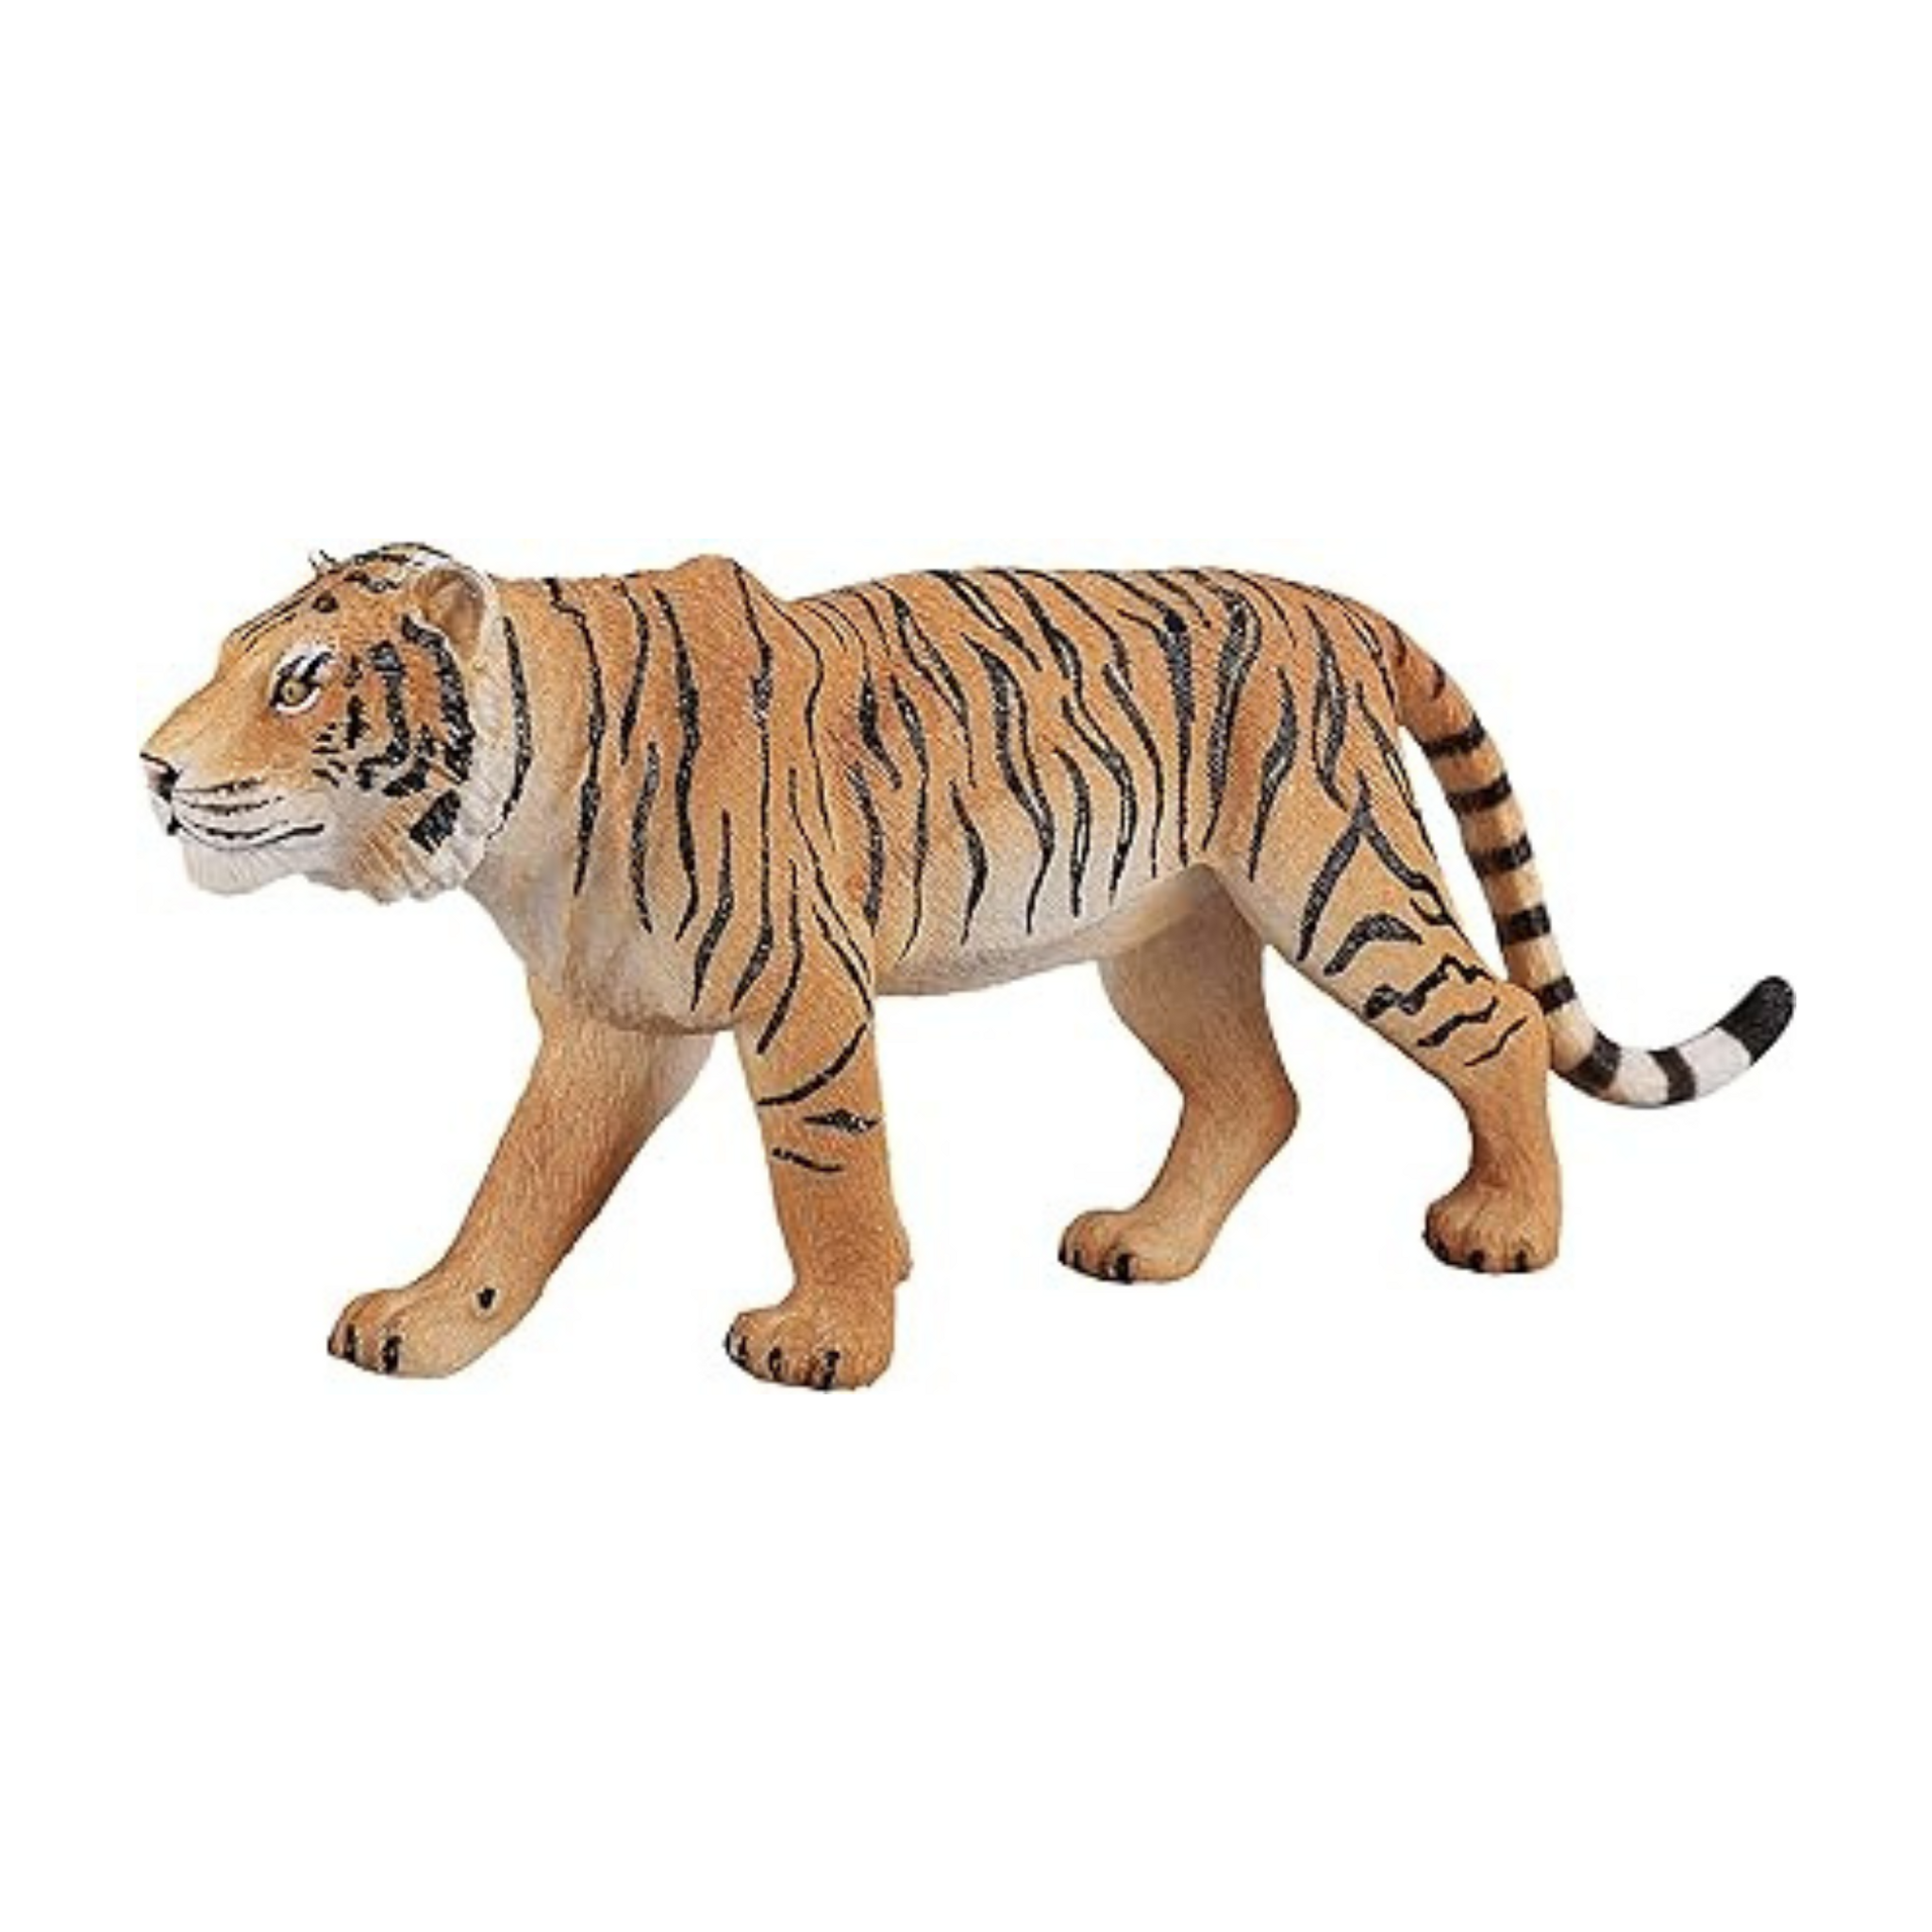 MOJO Bengal Tiger Figurine Toy